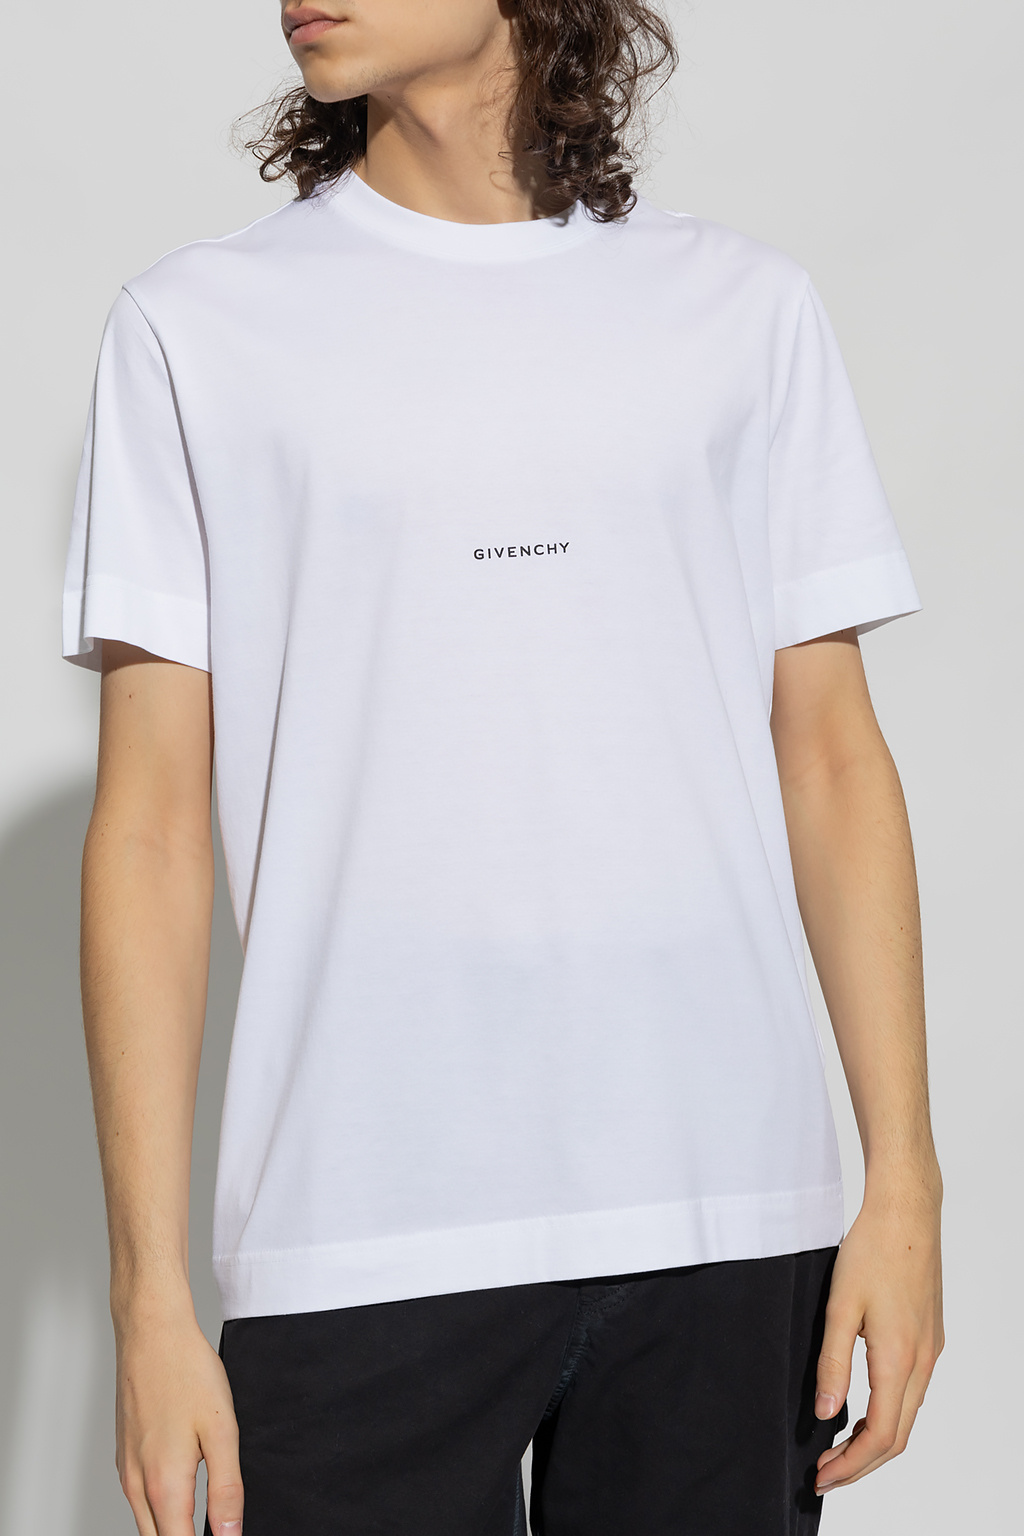 Givenchy givenchy kids logo print cotton t shirt item